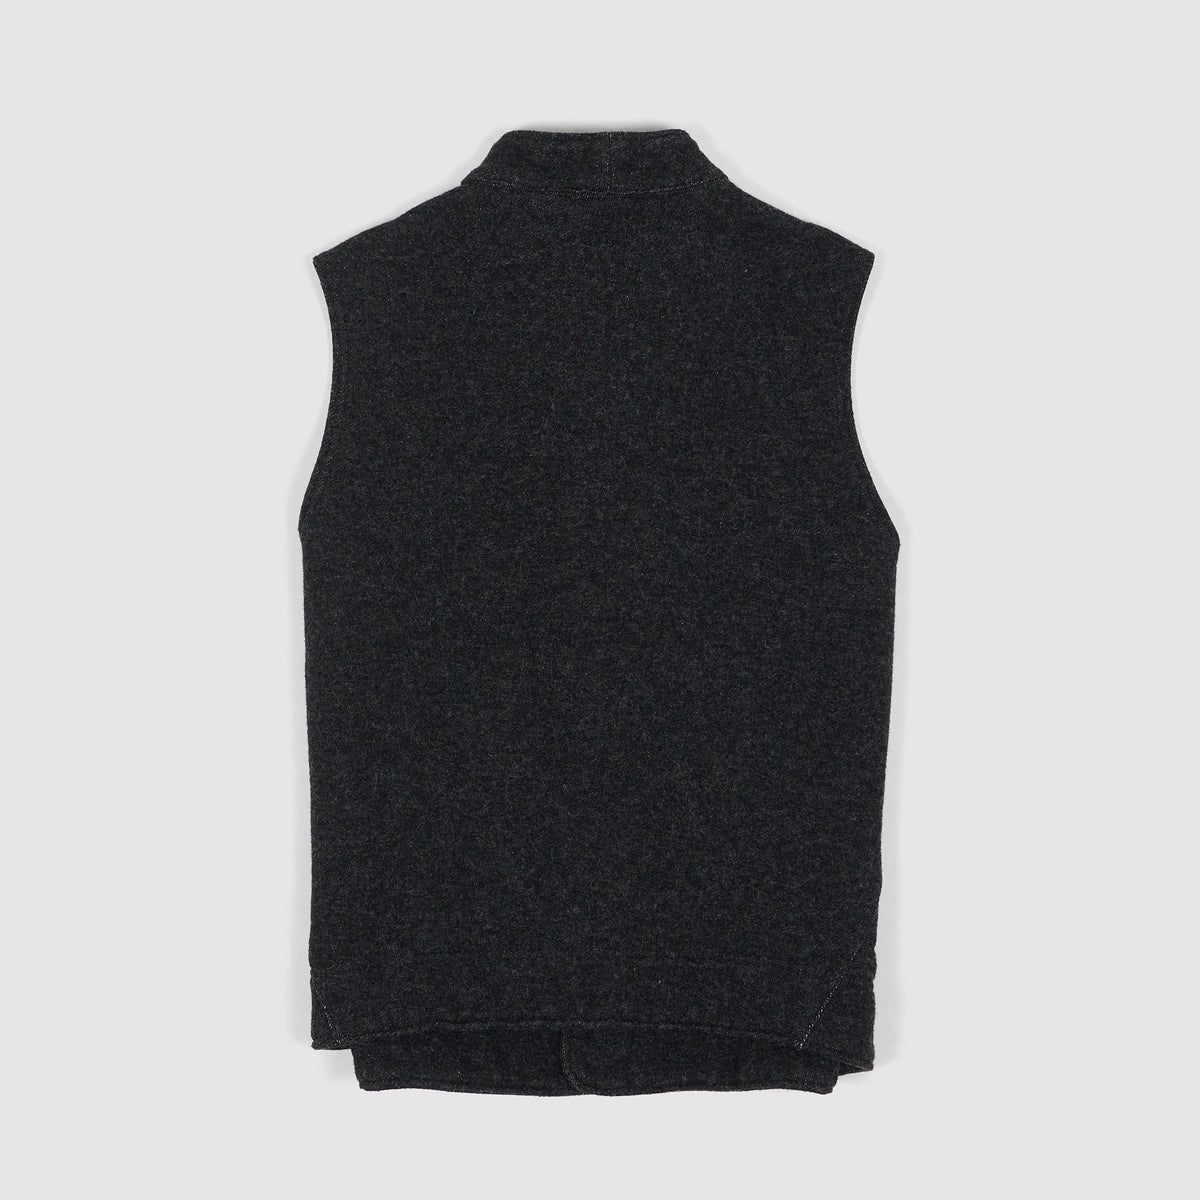 Black Sign Sweater Jersey Vest